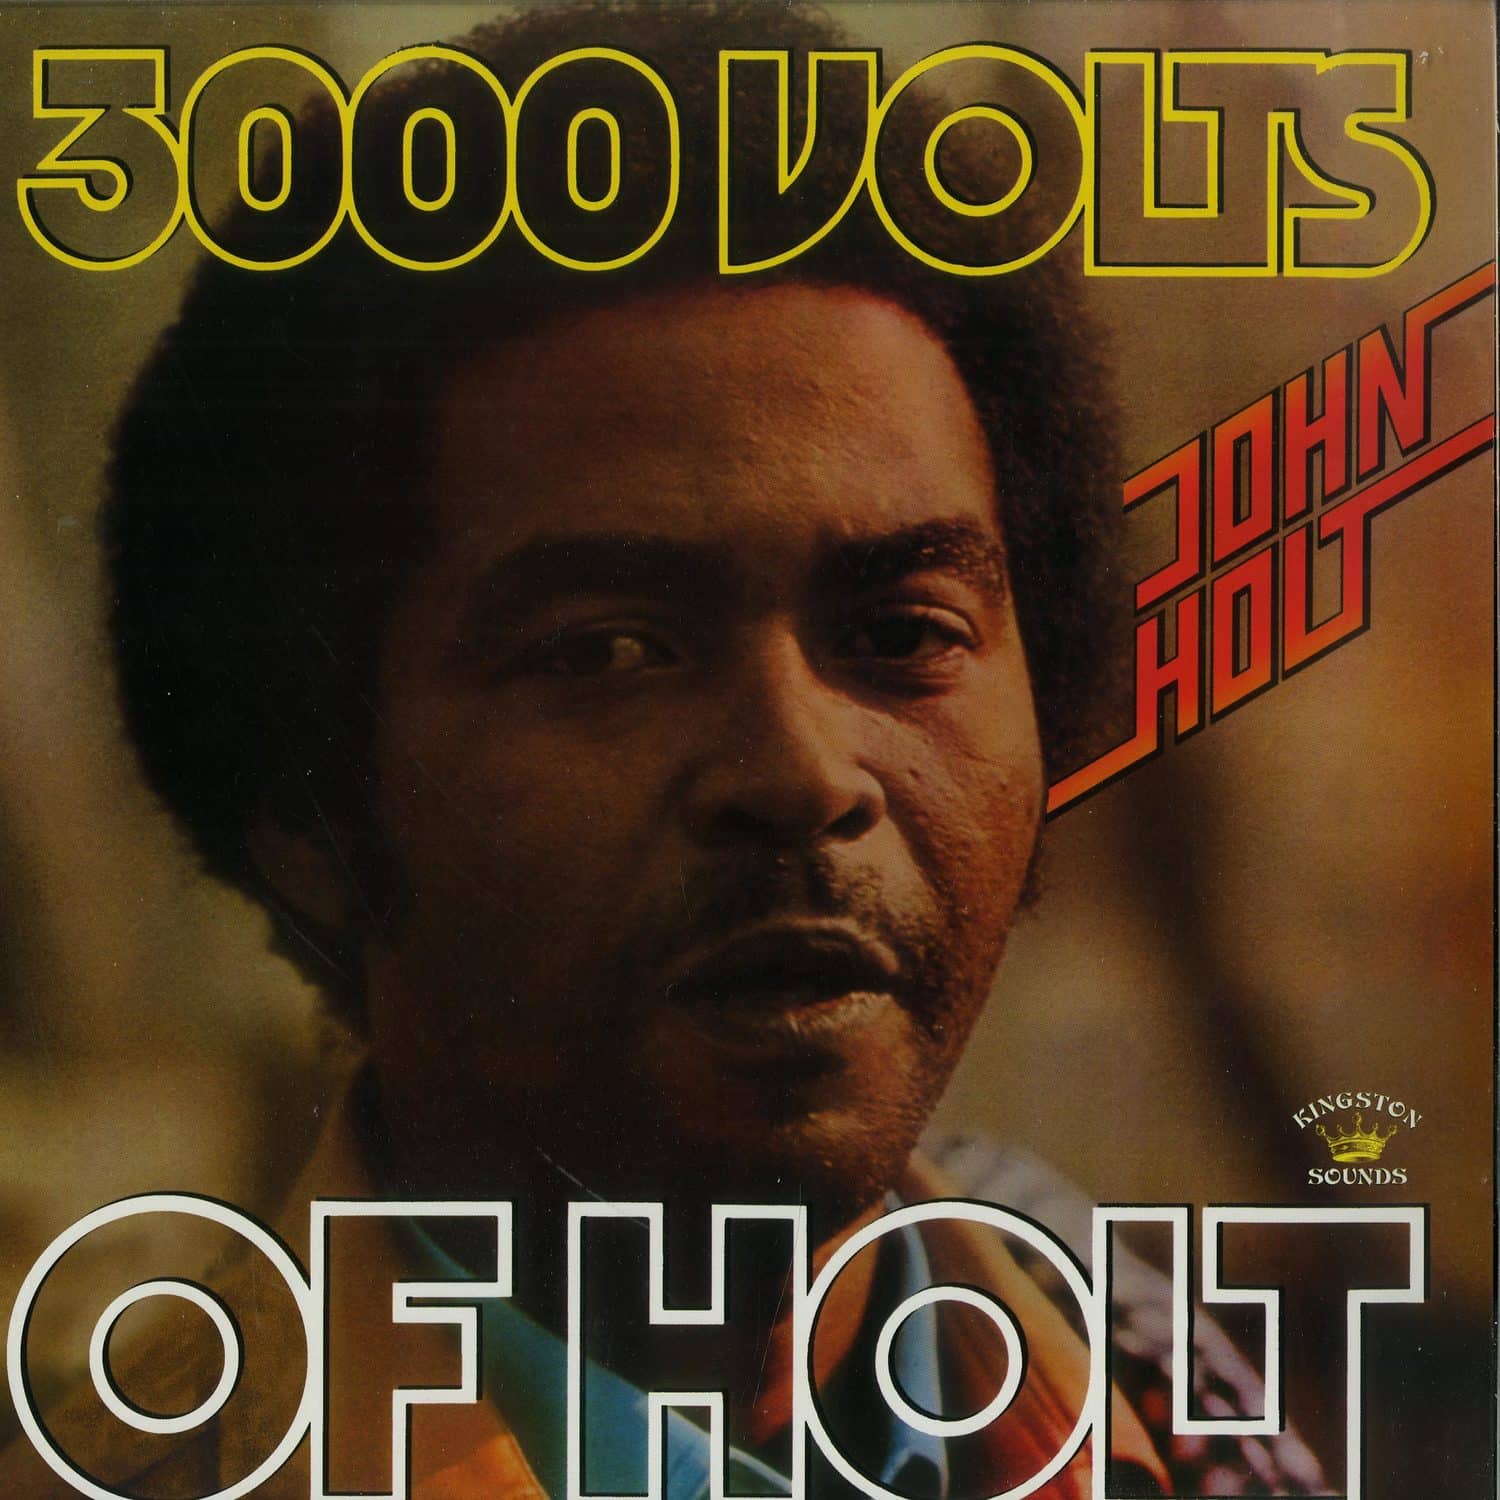 John Holt - 3000 VOLTS OF HOLT 